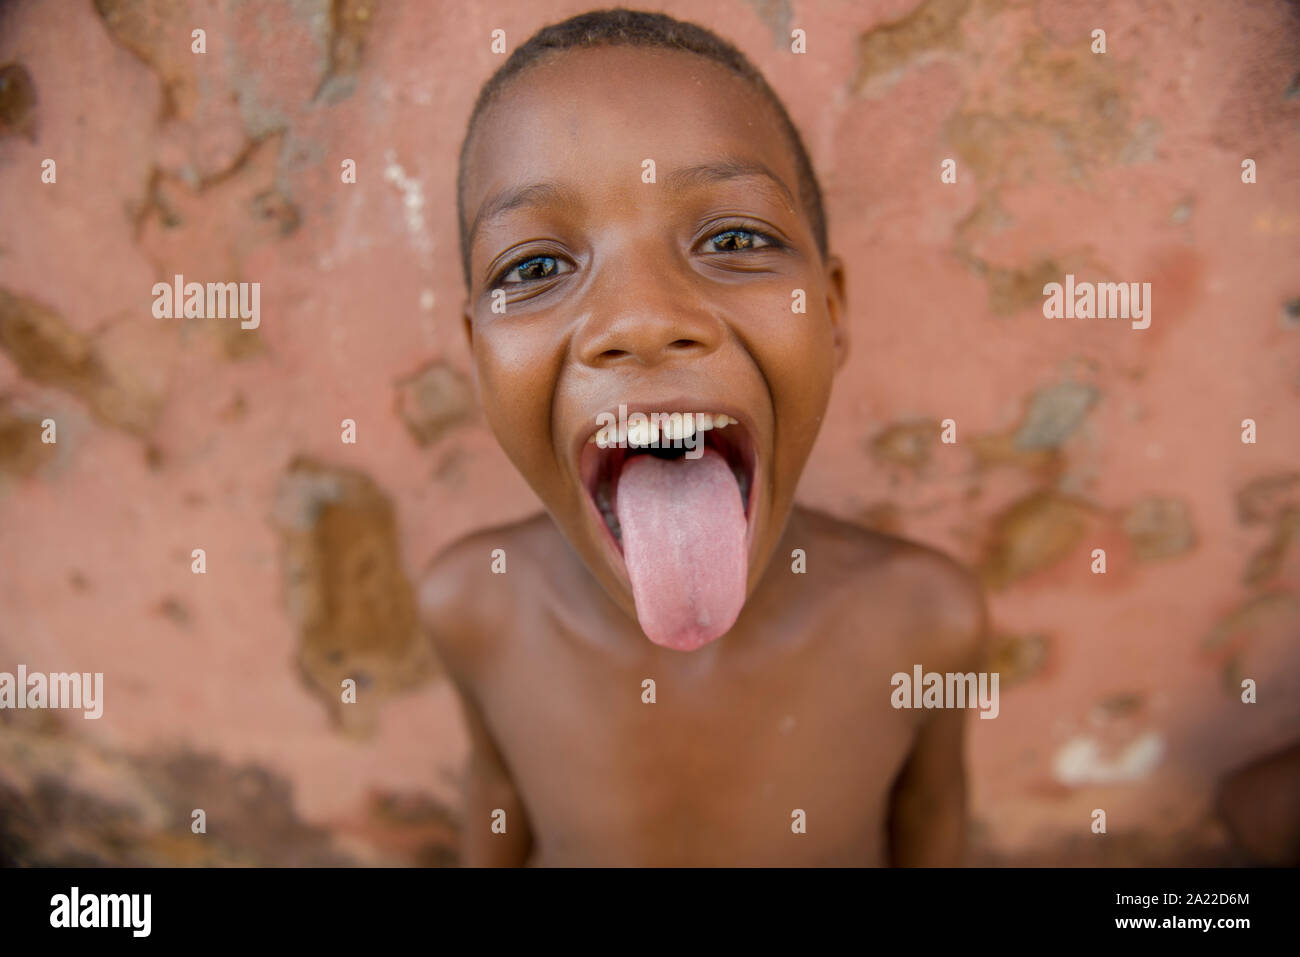 Chico afrobrasileña stick lengua fuera en el momento alegre Foto de stock